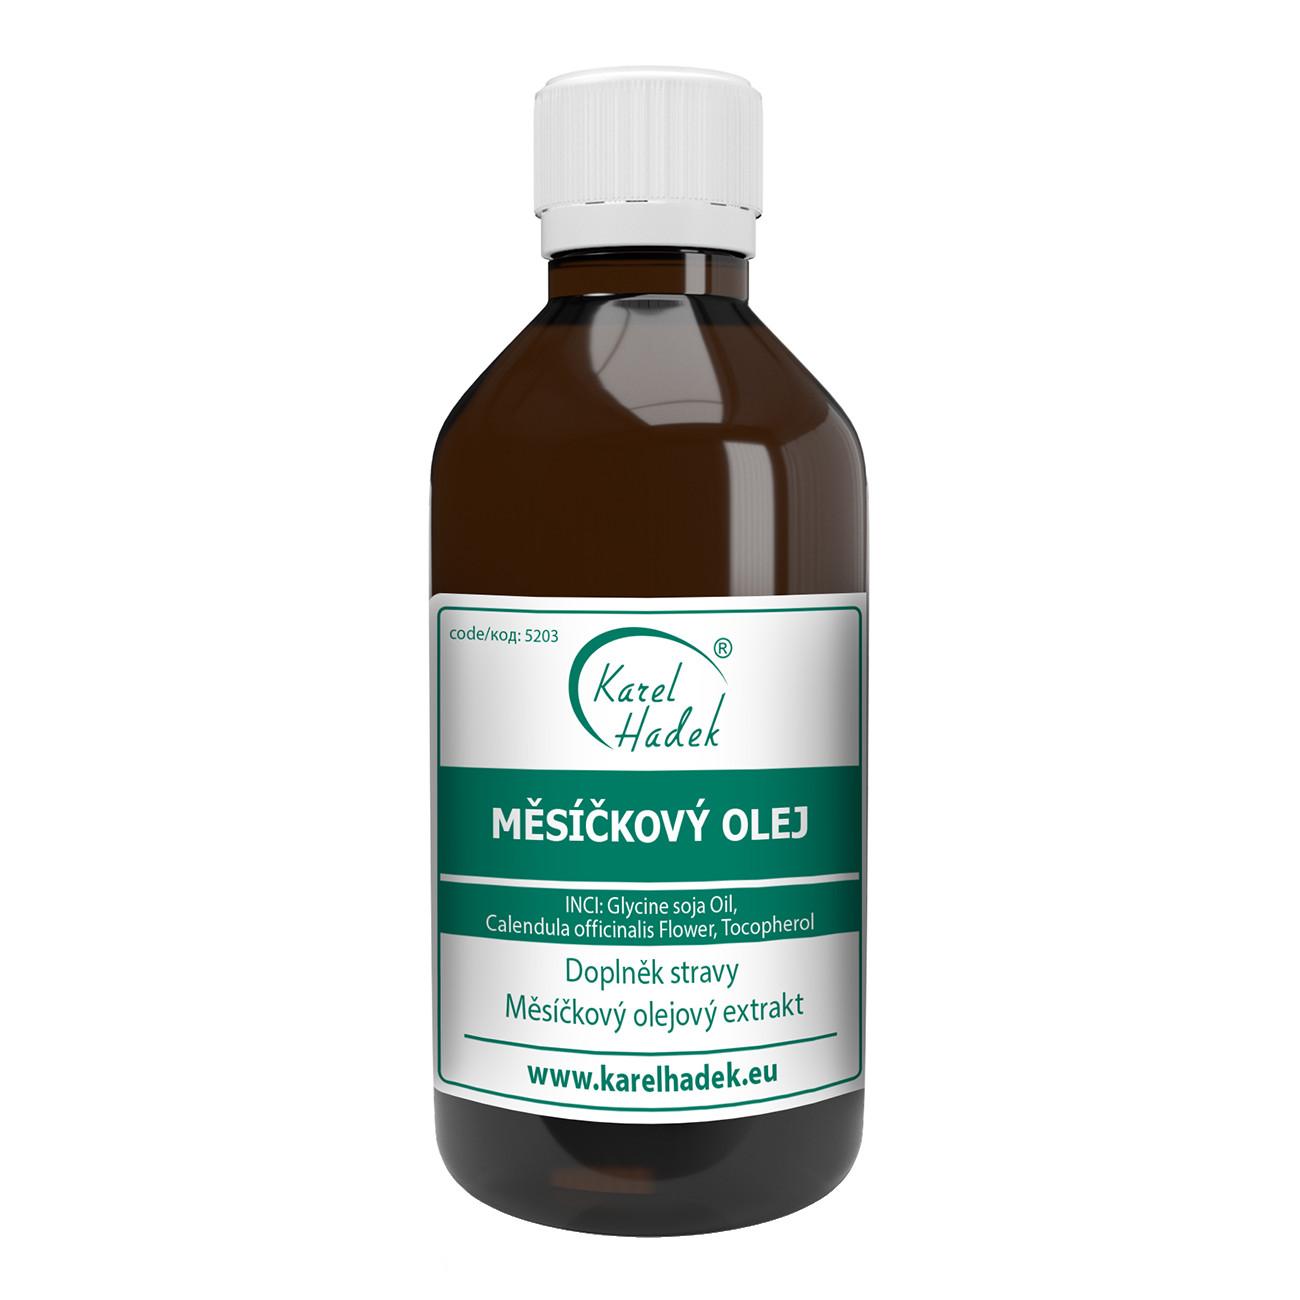 Aromaterapie Karel Hadek Měsíčkový olej 115 ml